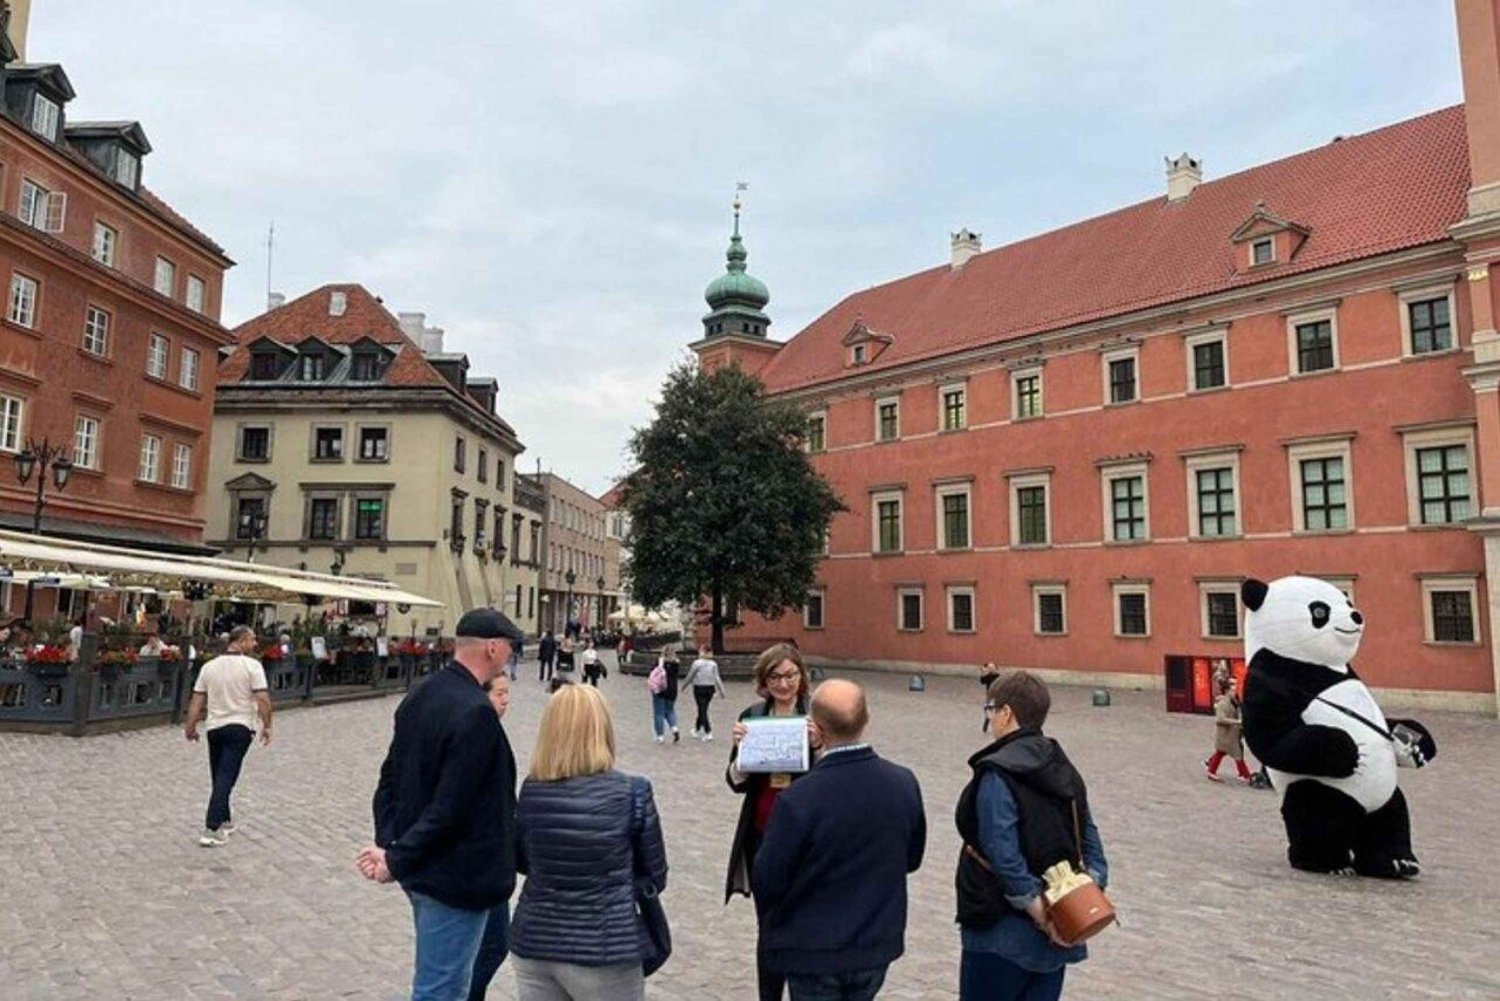 Warsaw Historic Heart Walking Tour - must-see & hidden gems